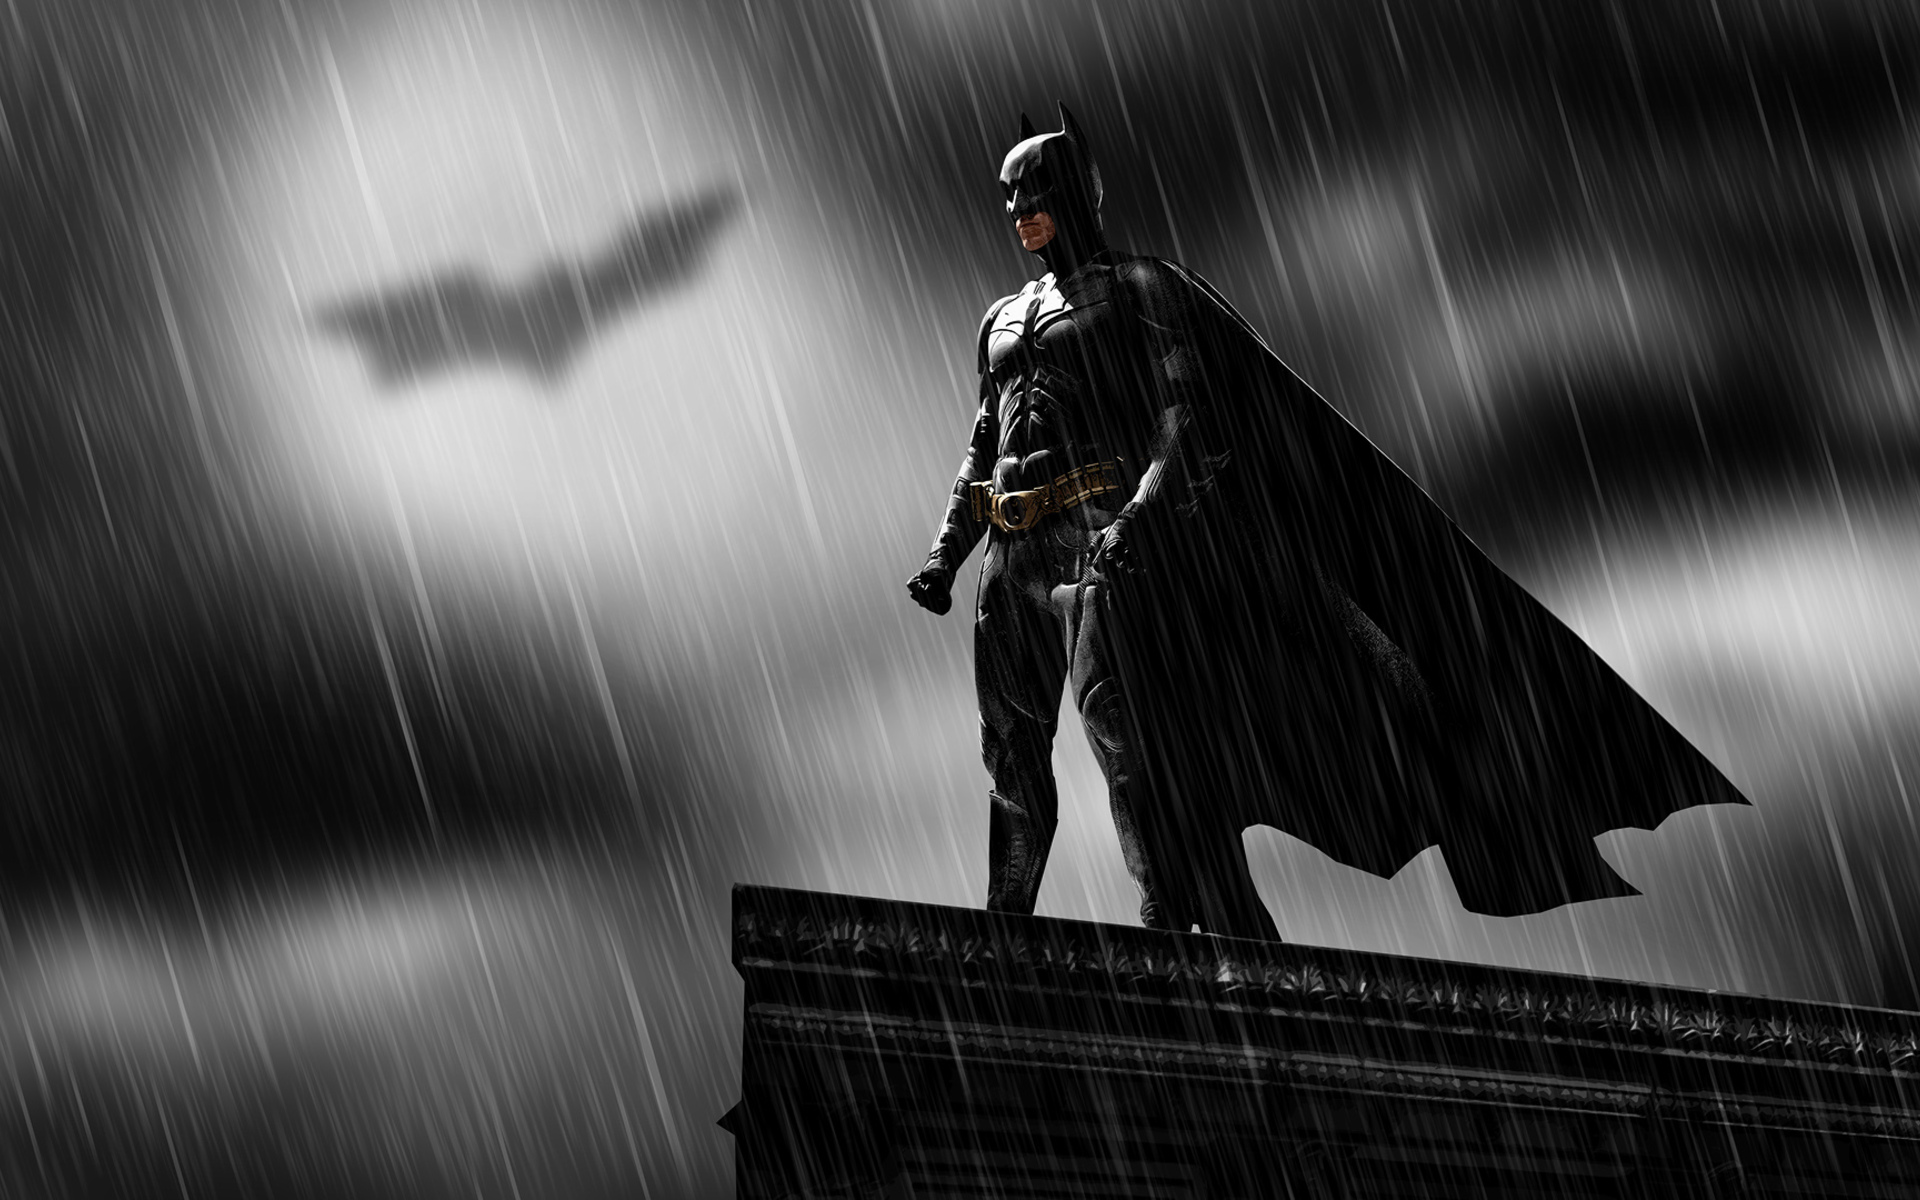 Dark Knight movie poster image featuring Batman.